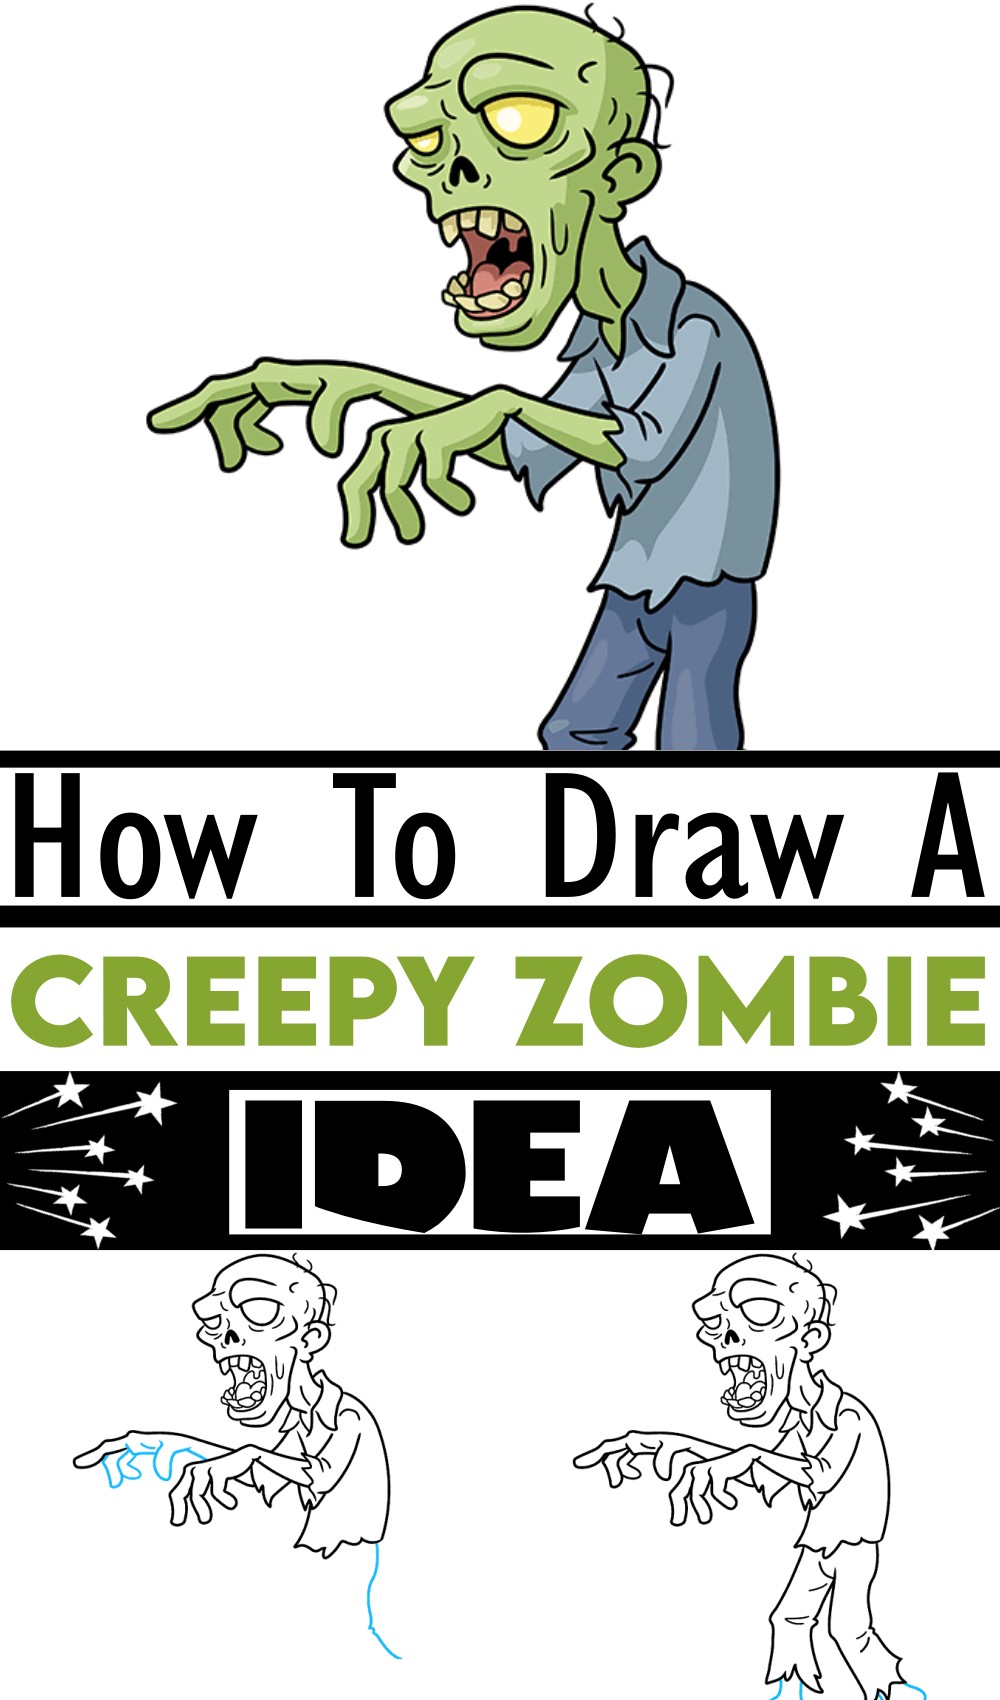 How To Draw A Creepy Zombie